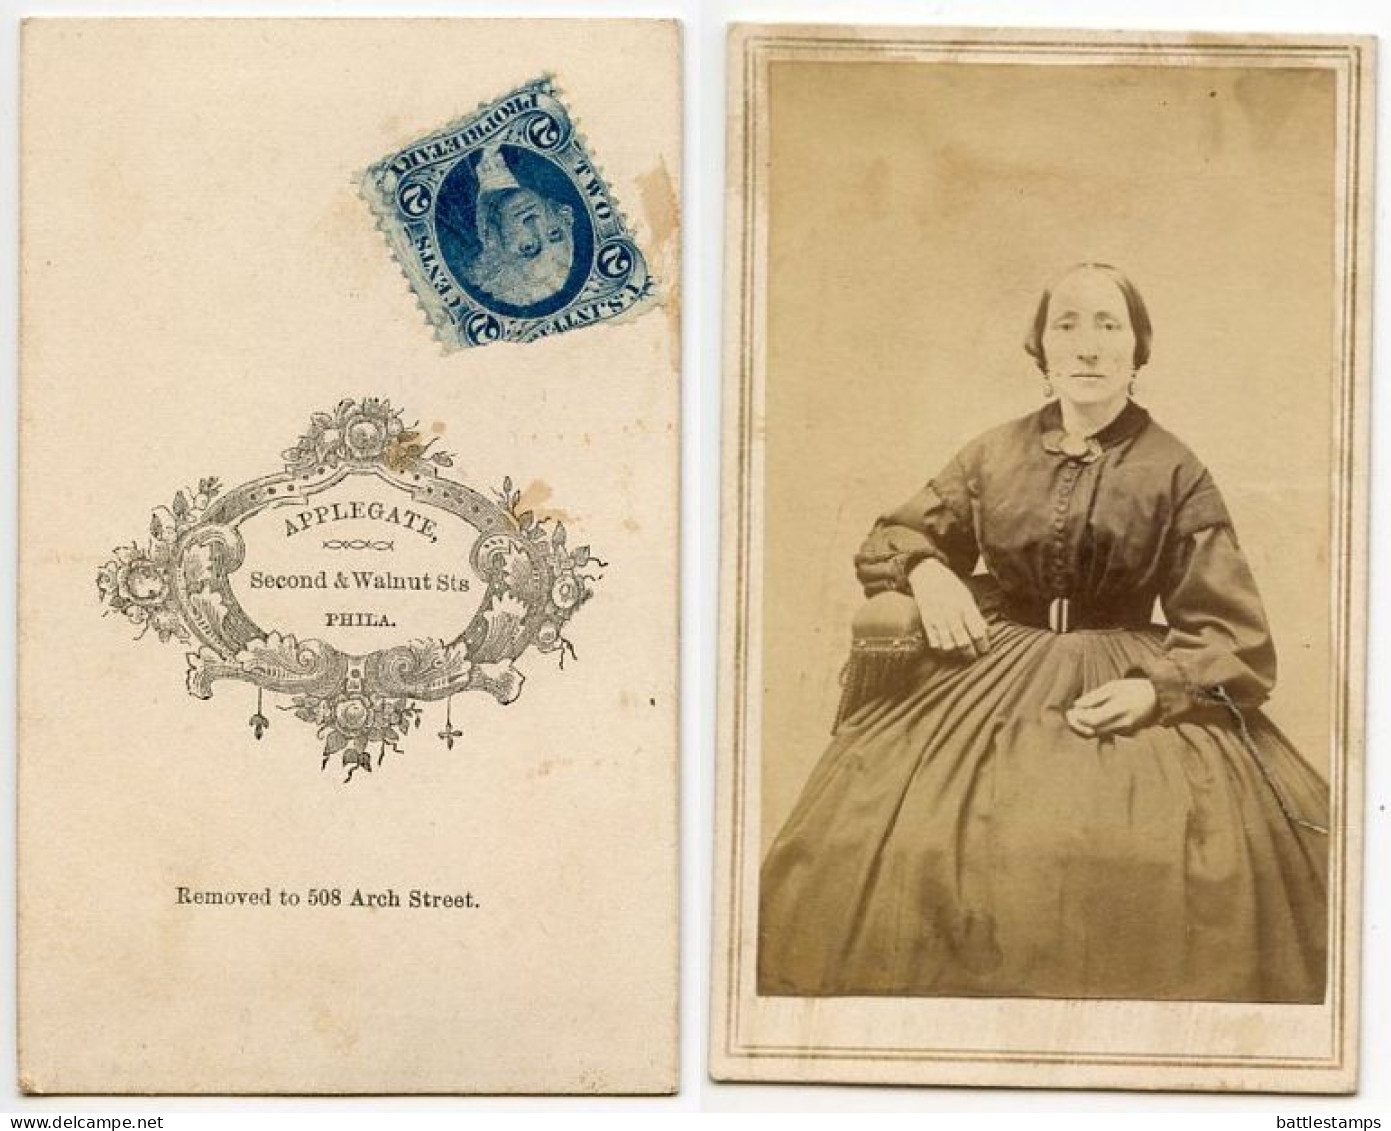 United States 1860‘s Photograph, Woman - Applegate, Philadelphia Pennsylvania - Scott R13c Revenue Stamp - Revenues